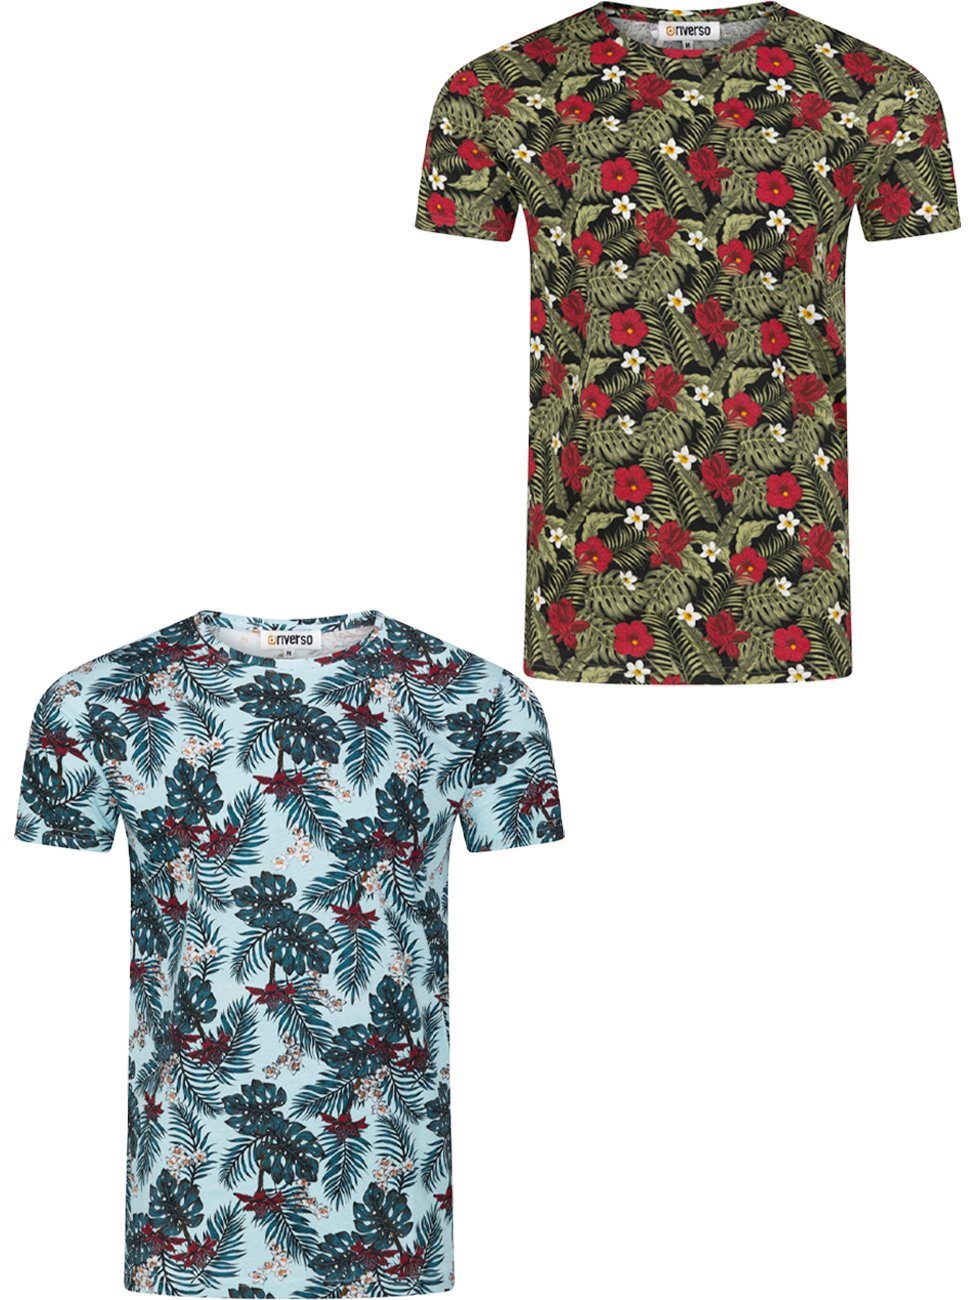 Kurzarm Baumwolle 100% (2-tlg) RIVBill riverso mit Fit 2 Farbmix T-Shirt Printshirt Regular aus Rundhalsausschnitt Herren Hawaiishirt